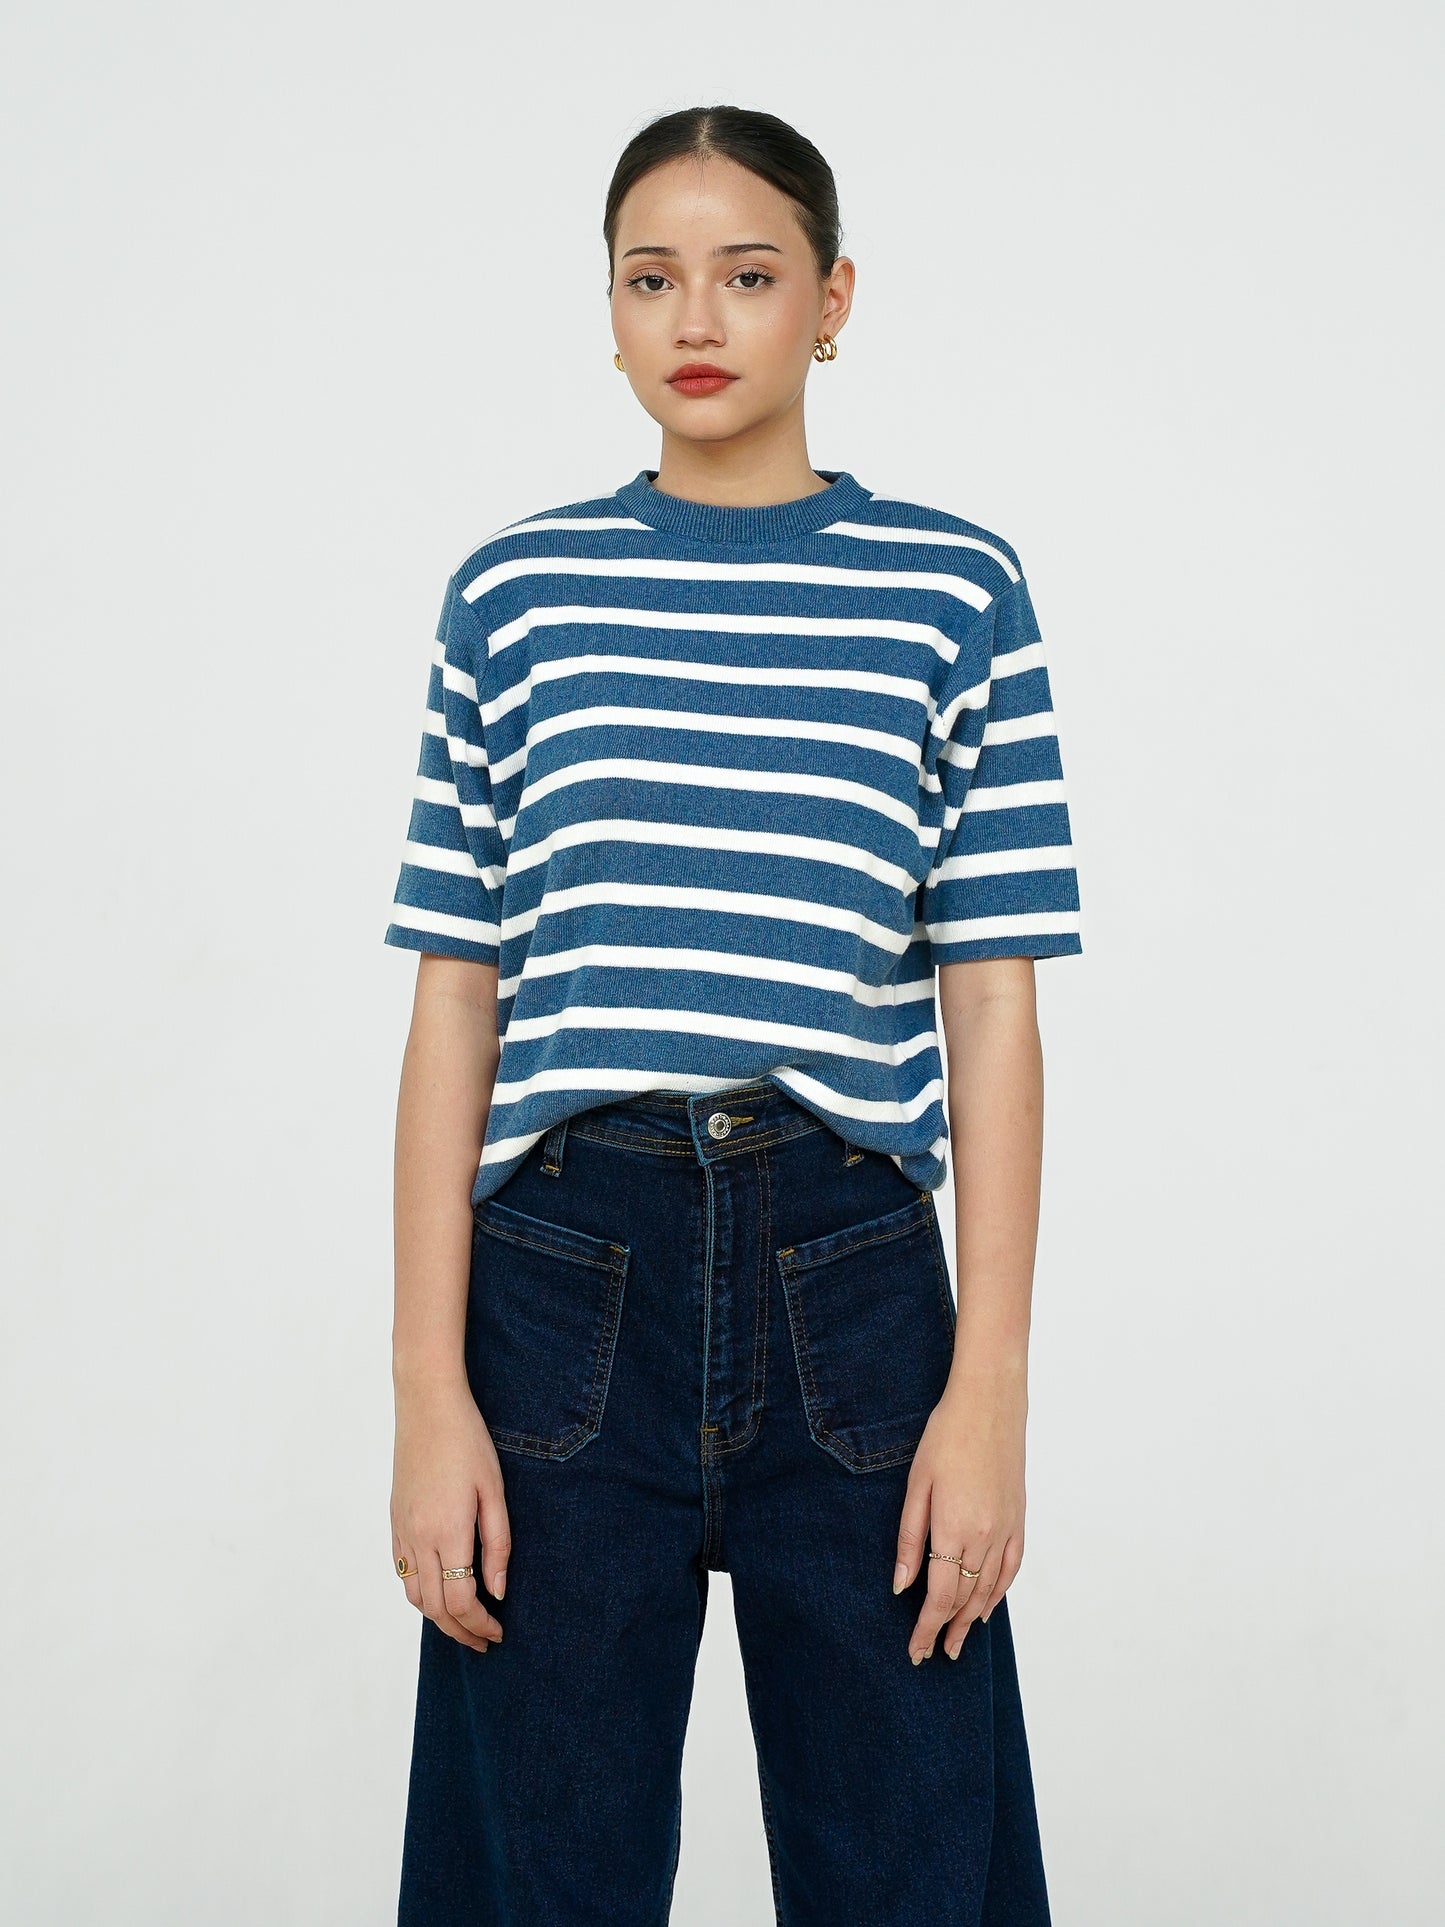 Mercia Striped Knit Top Short Sleeve Striped Dark Blue